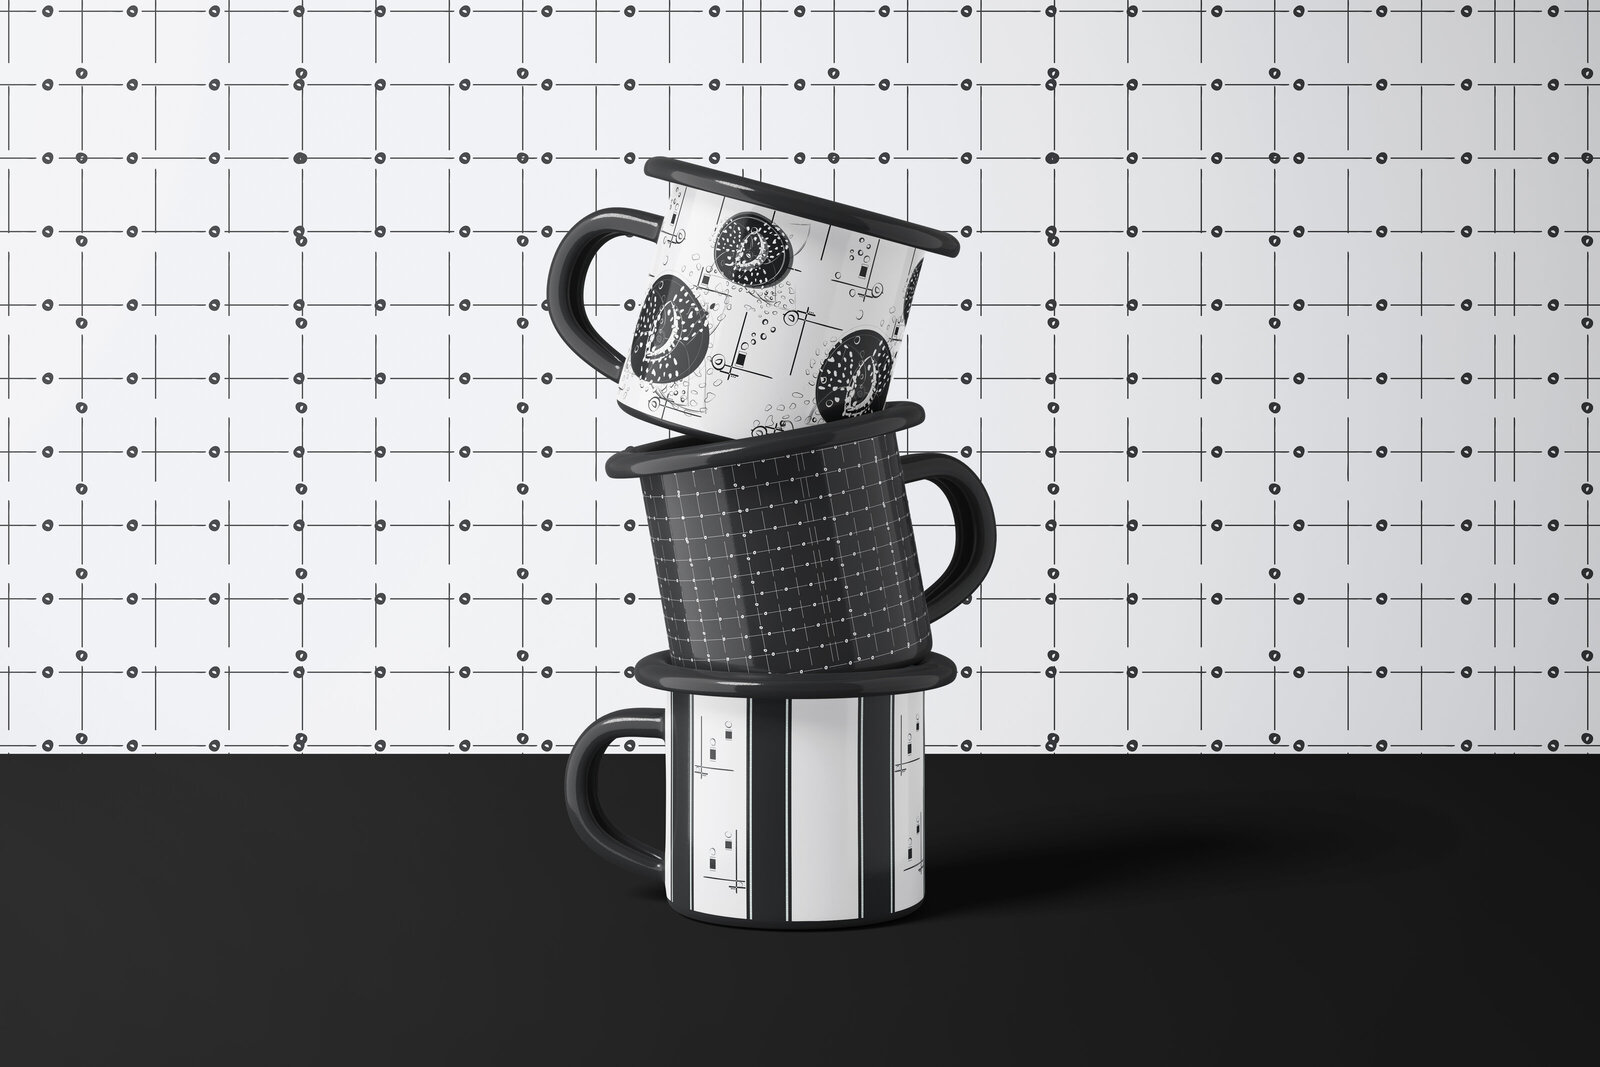 Charisse-Marei-pattern-design-on-mugs